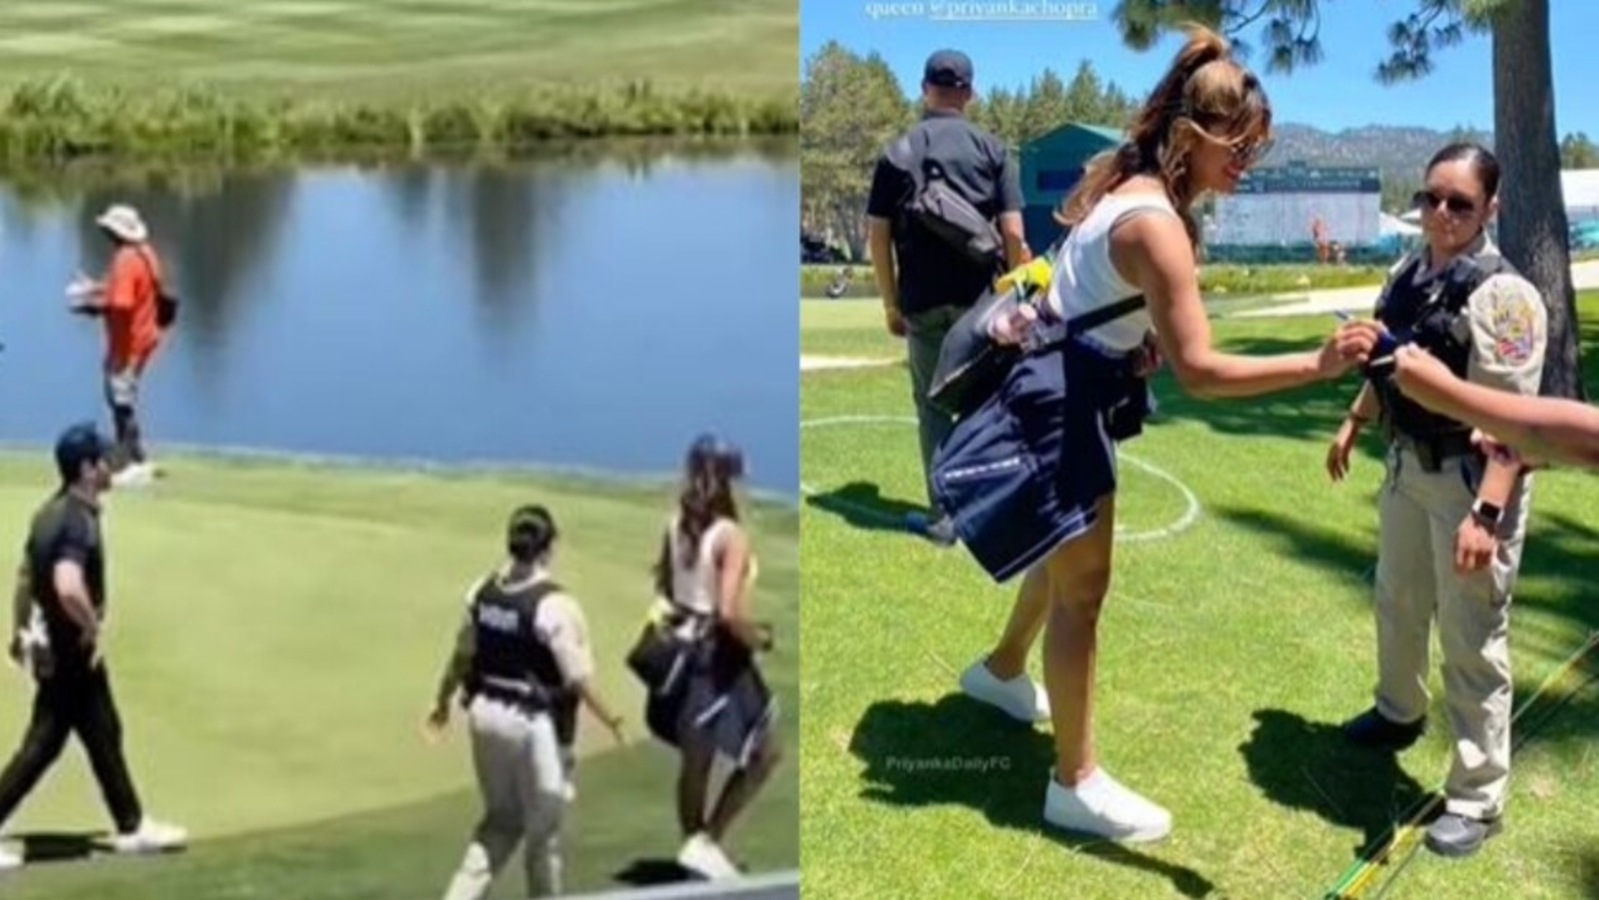 Priyanka Chopra turns cheerleader for Nick Jonas as he plays golf at Lake Tahoe. Watch